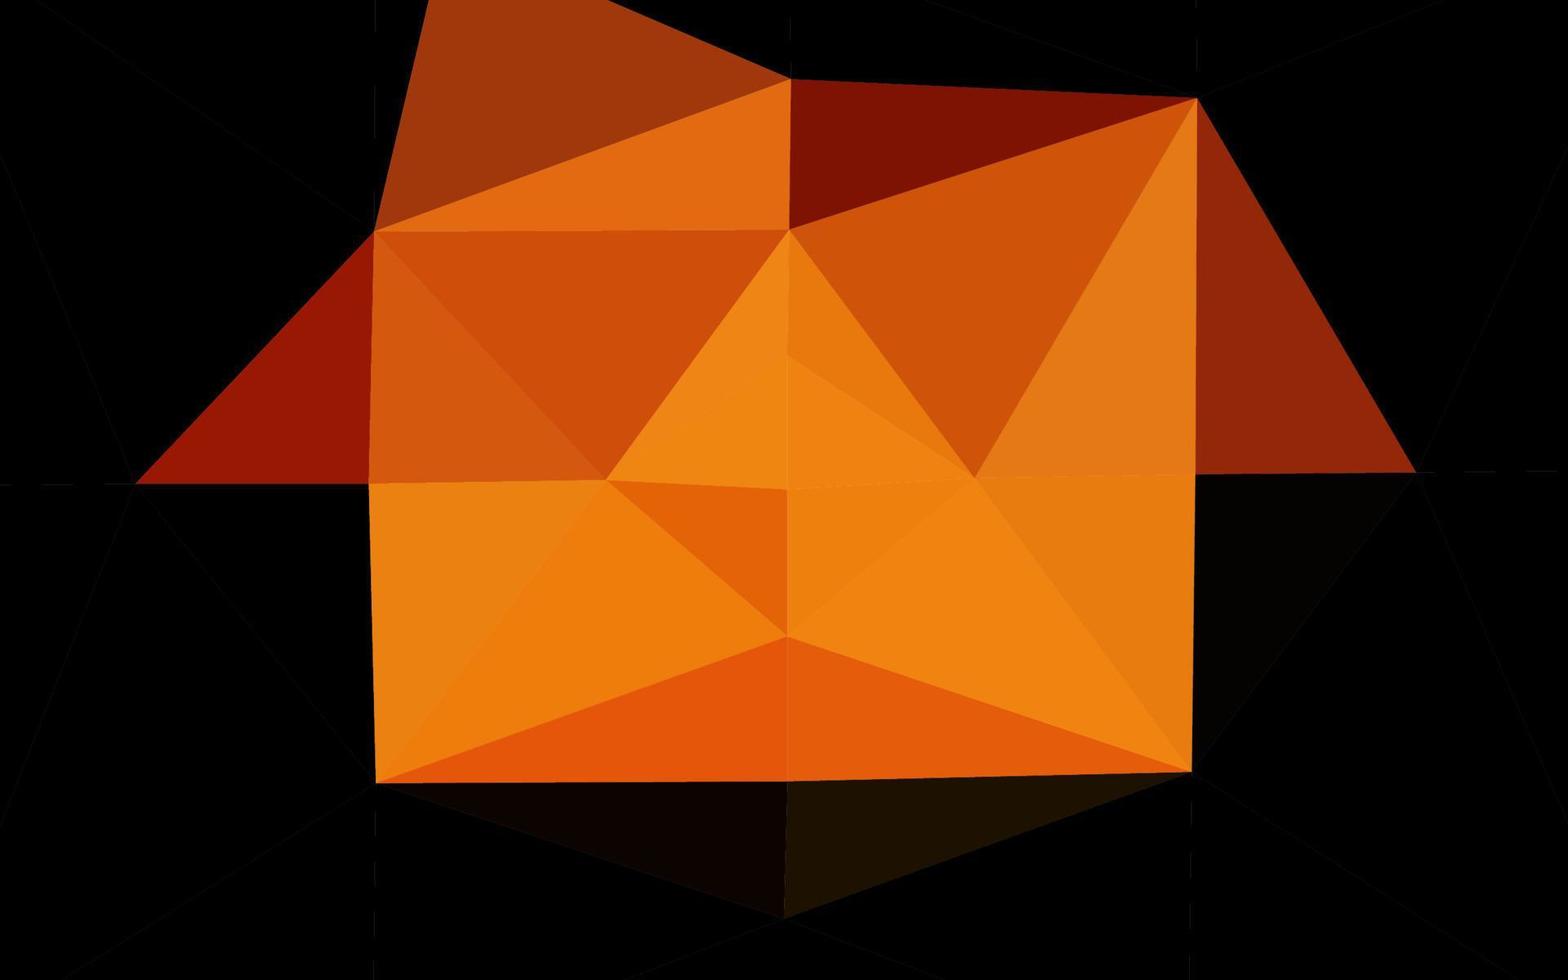 Light Orange vector abstract polygonal texture.